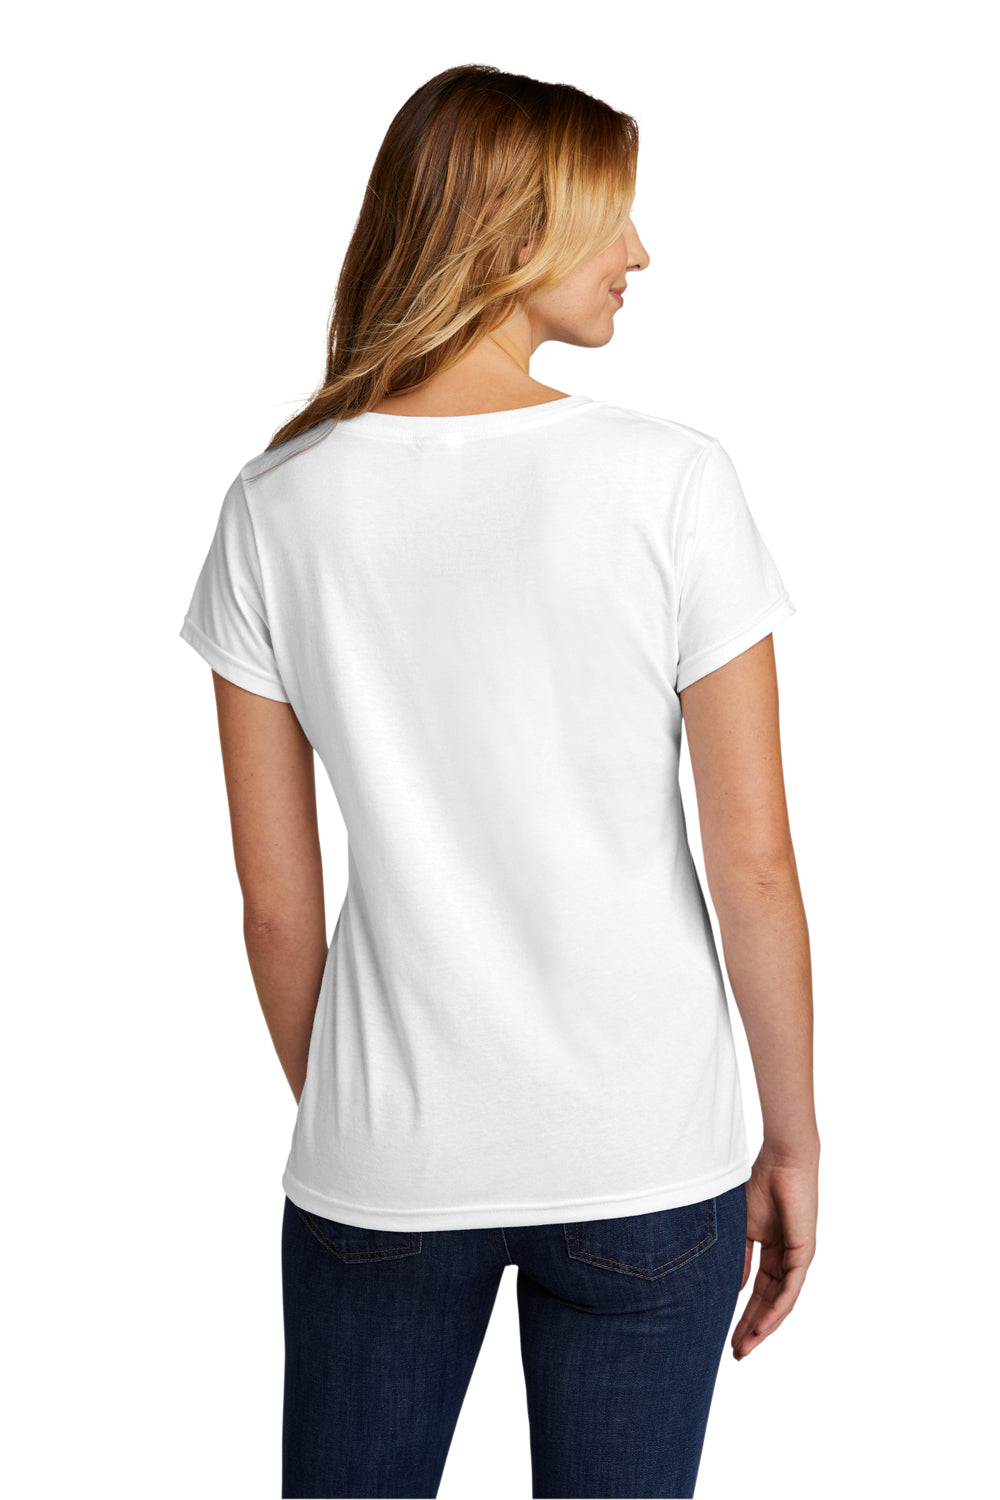 Port & Company Womens Short Sleeve V-Neck T-Shirt White Side